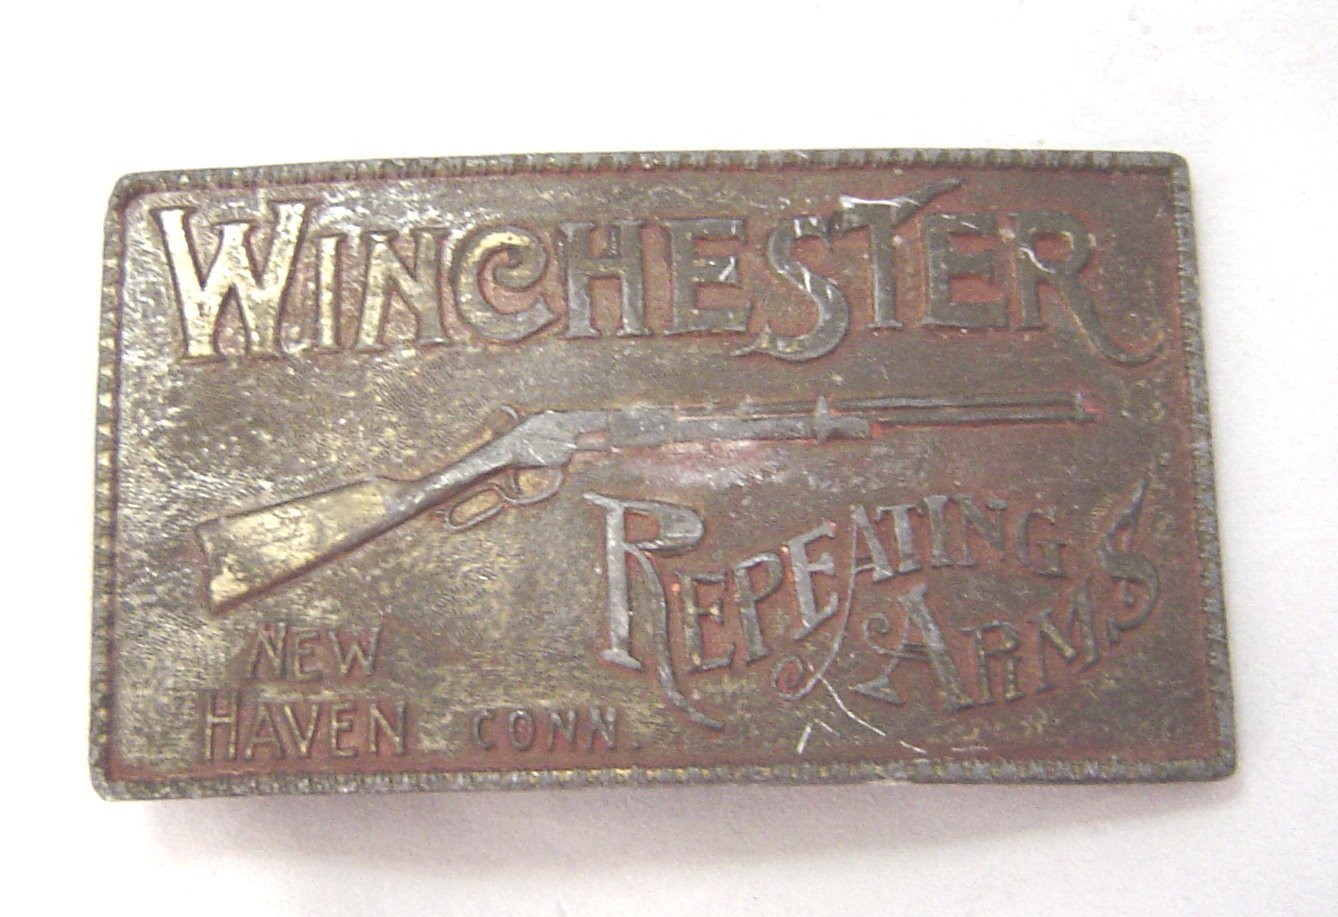  Winchester Repeating Arms Gun Shotgun Western 80s Vintage Belt Buckle - $12.99